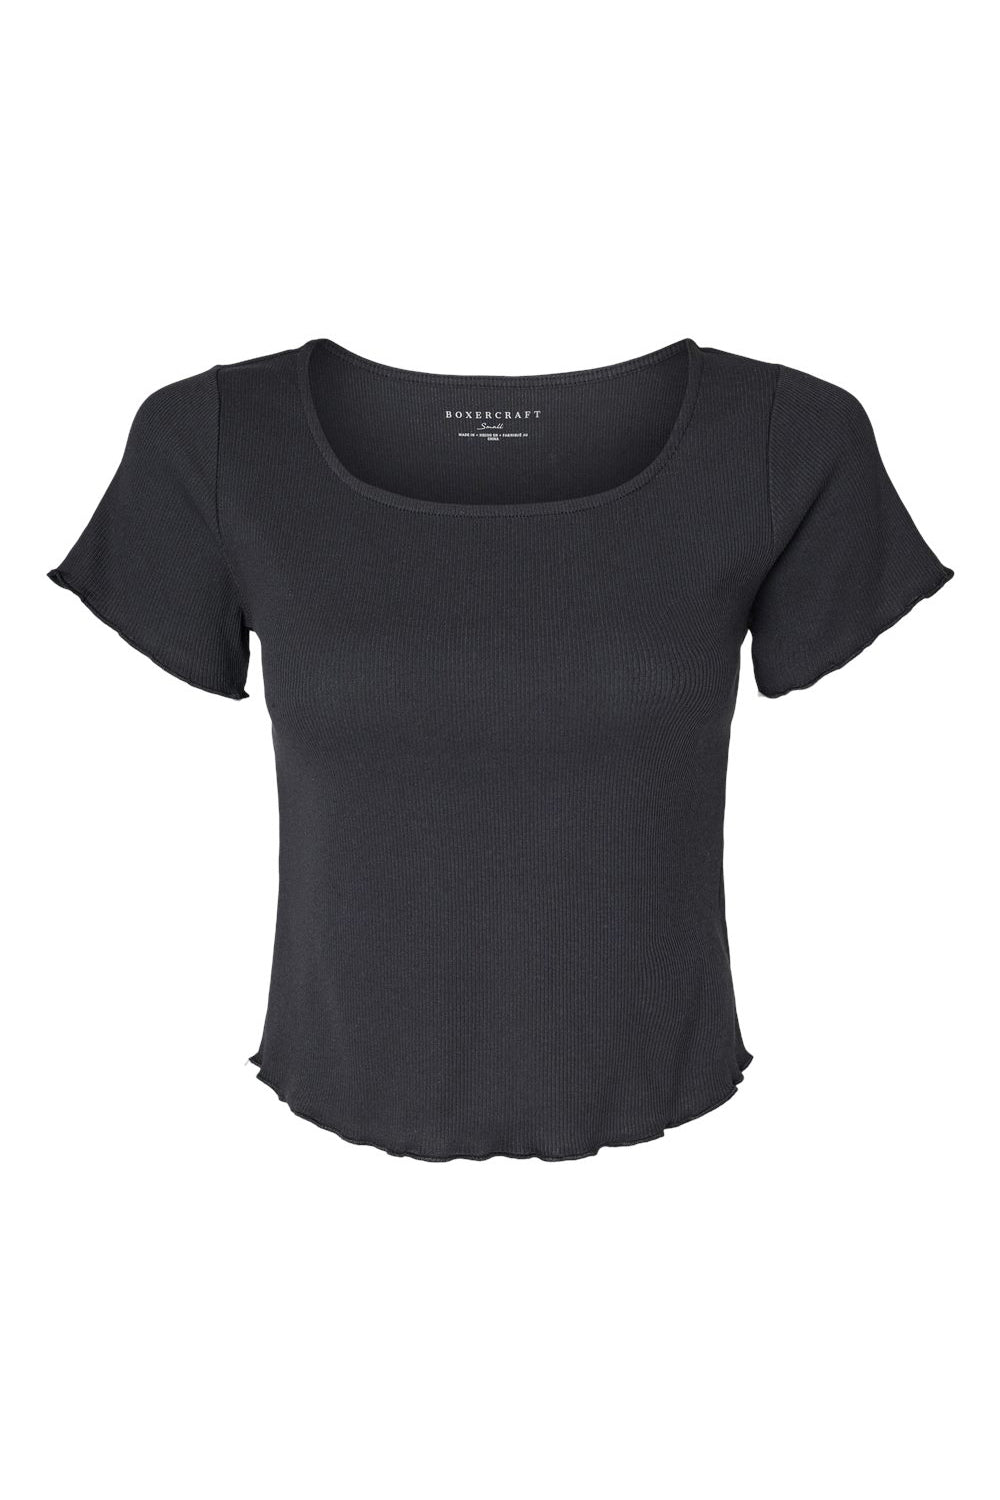 Boxercraft BW2403 Womens Baby Rib Short Sleeve Scoop Neck T-Shirt Black Flat Front